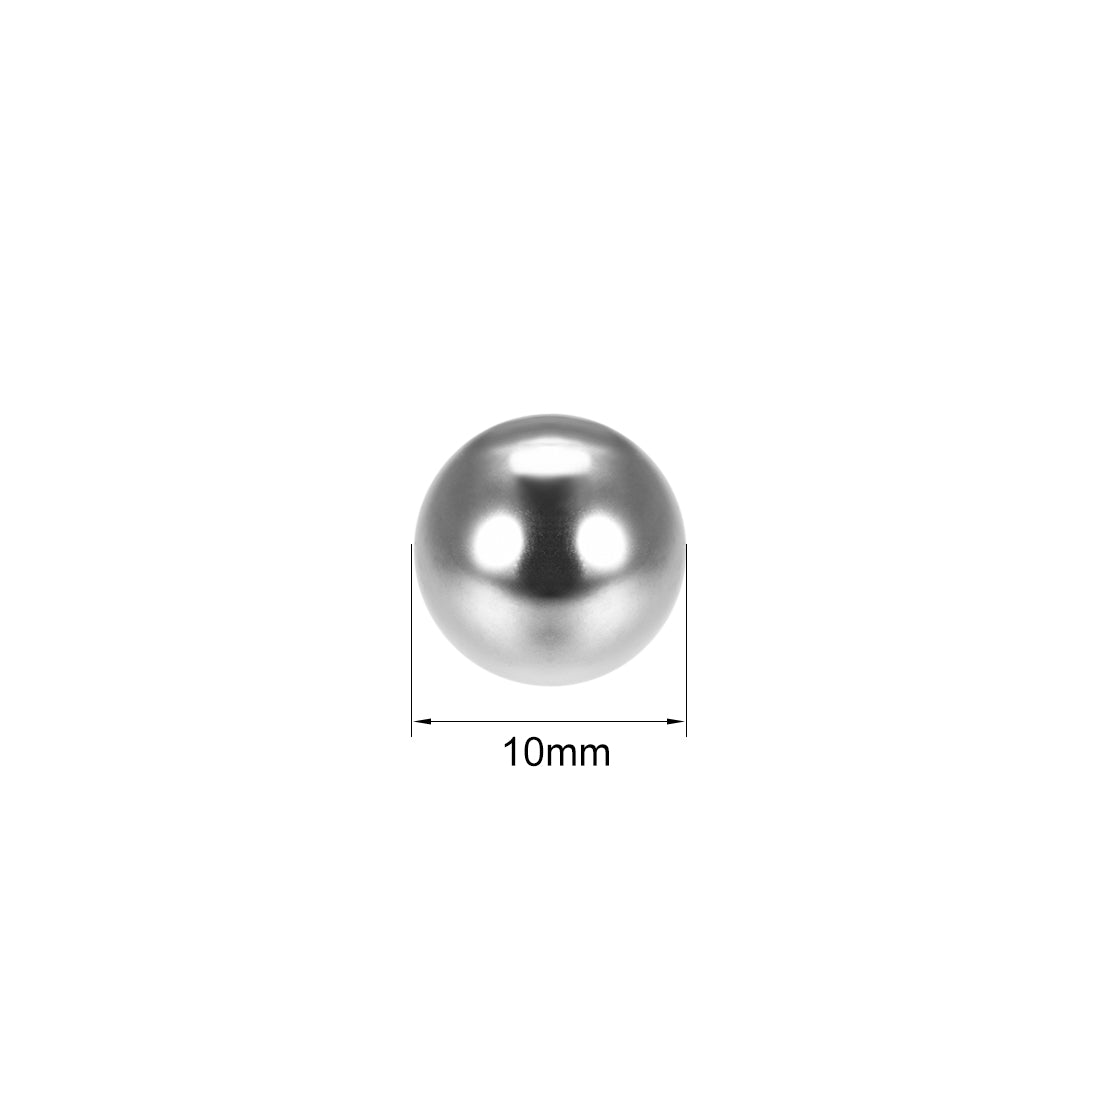 uxcell Uxcell 10mm Precision Chrome Steel Bearing Balls G25 30pcs